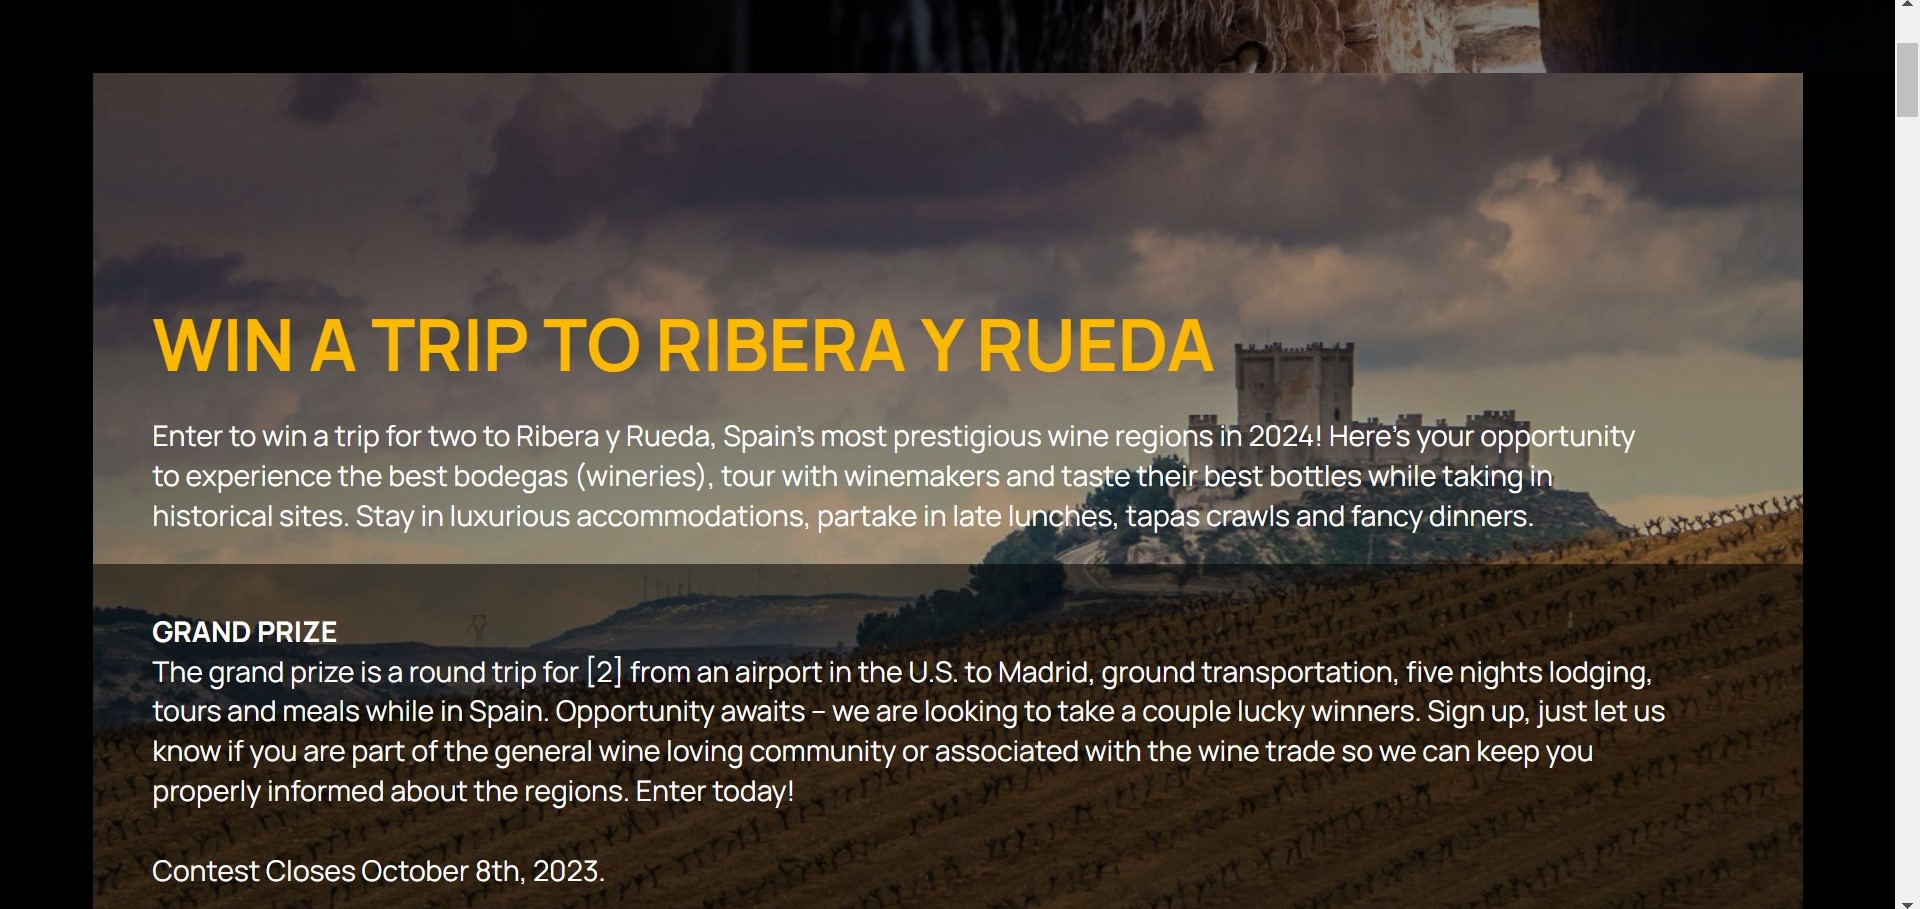 A Trip to Ribera Y Rueda